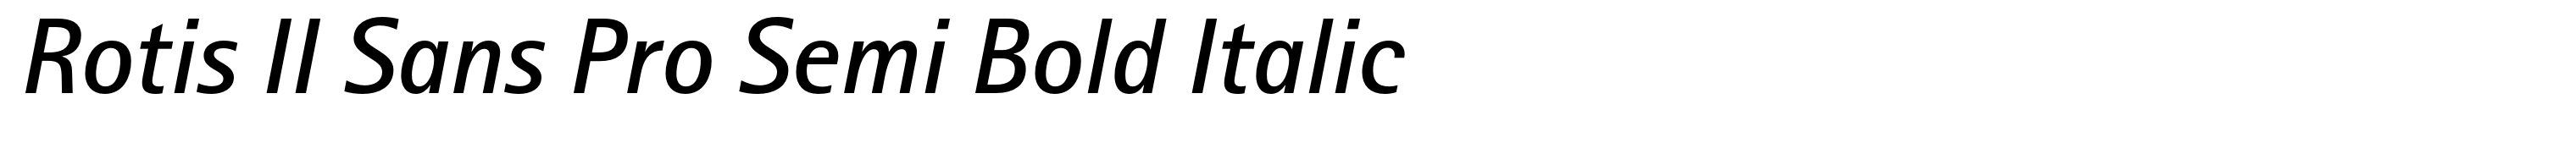 Rotis II Sans Pro Semi Bold Italic